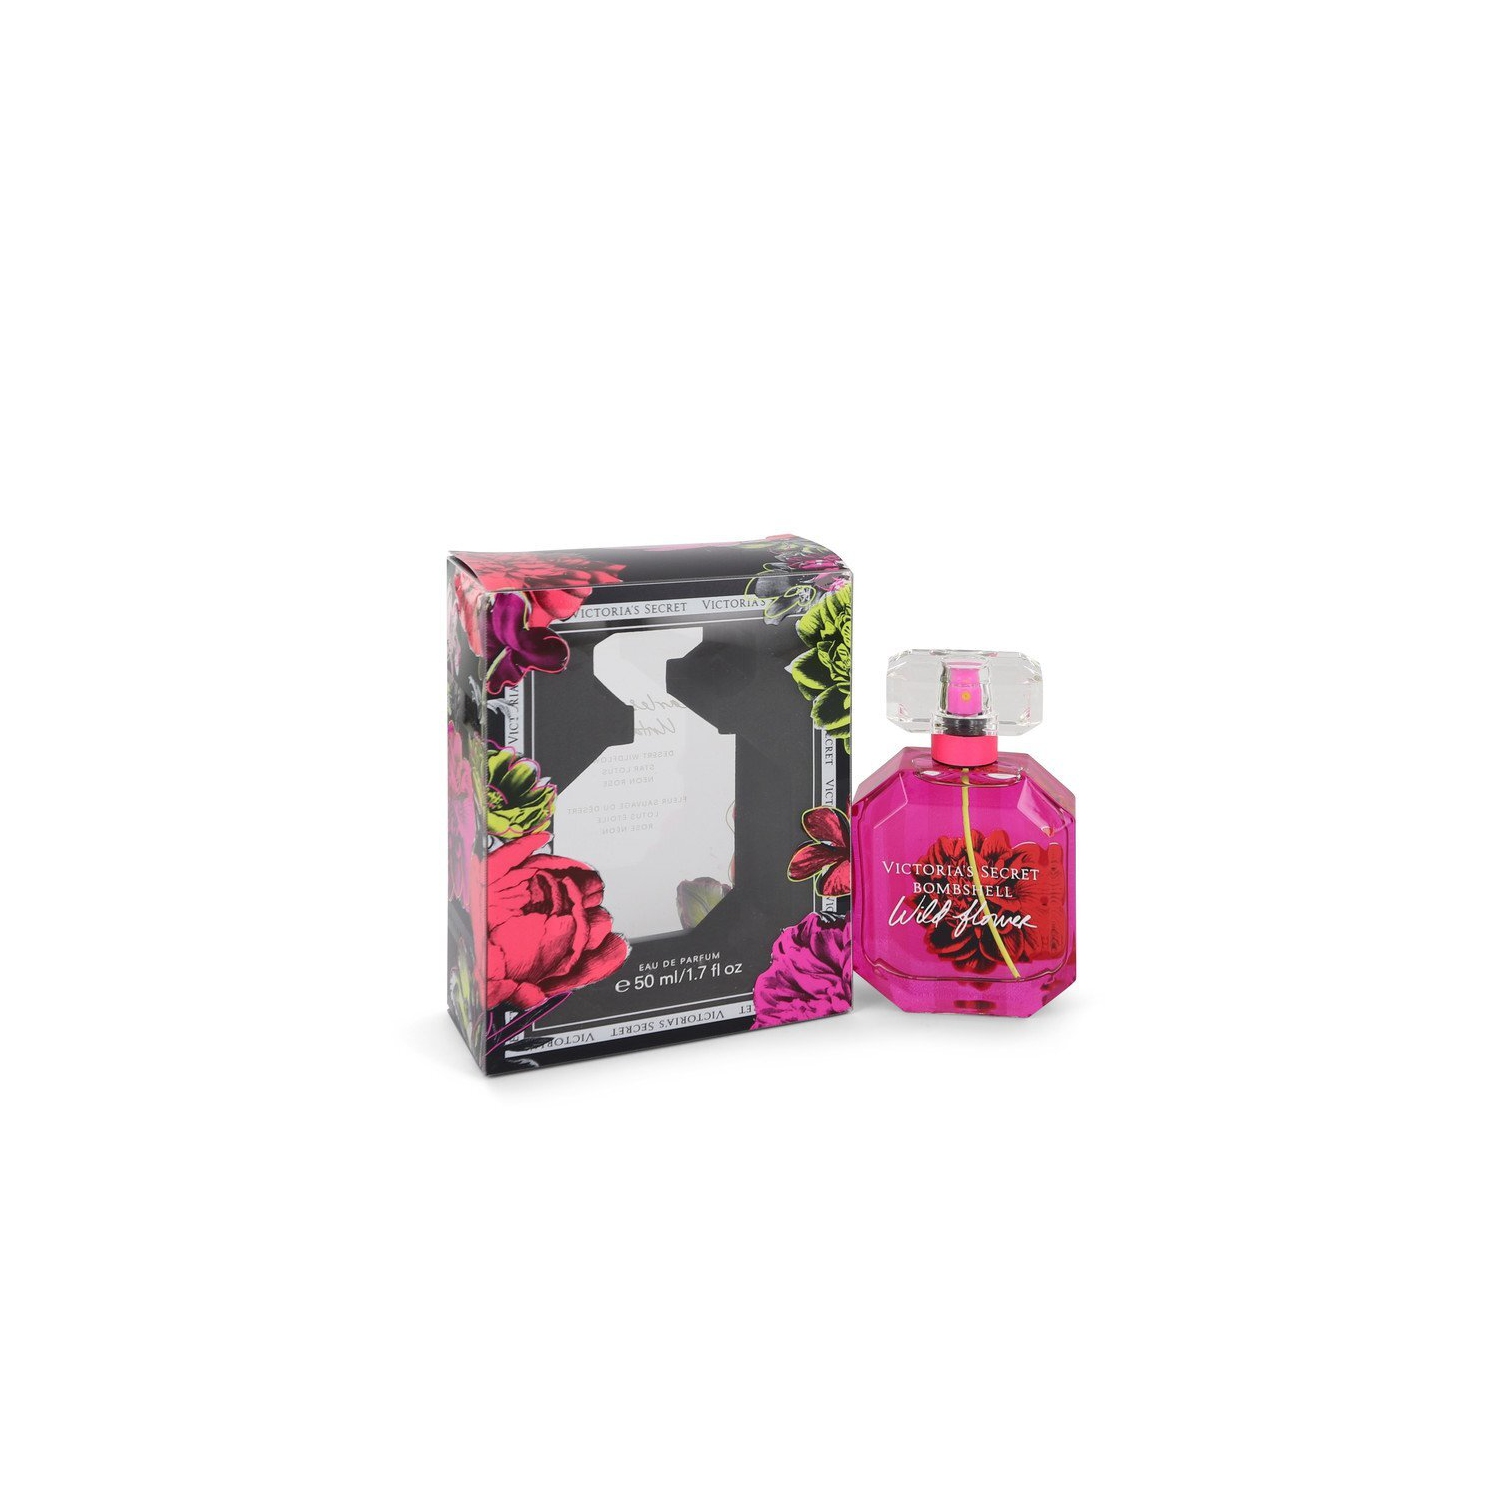 Bombshell Wild Flower by Victoria's Secret Eau De Parfum Spray (Women) 1.7 oz